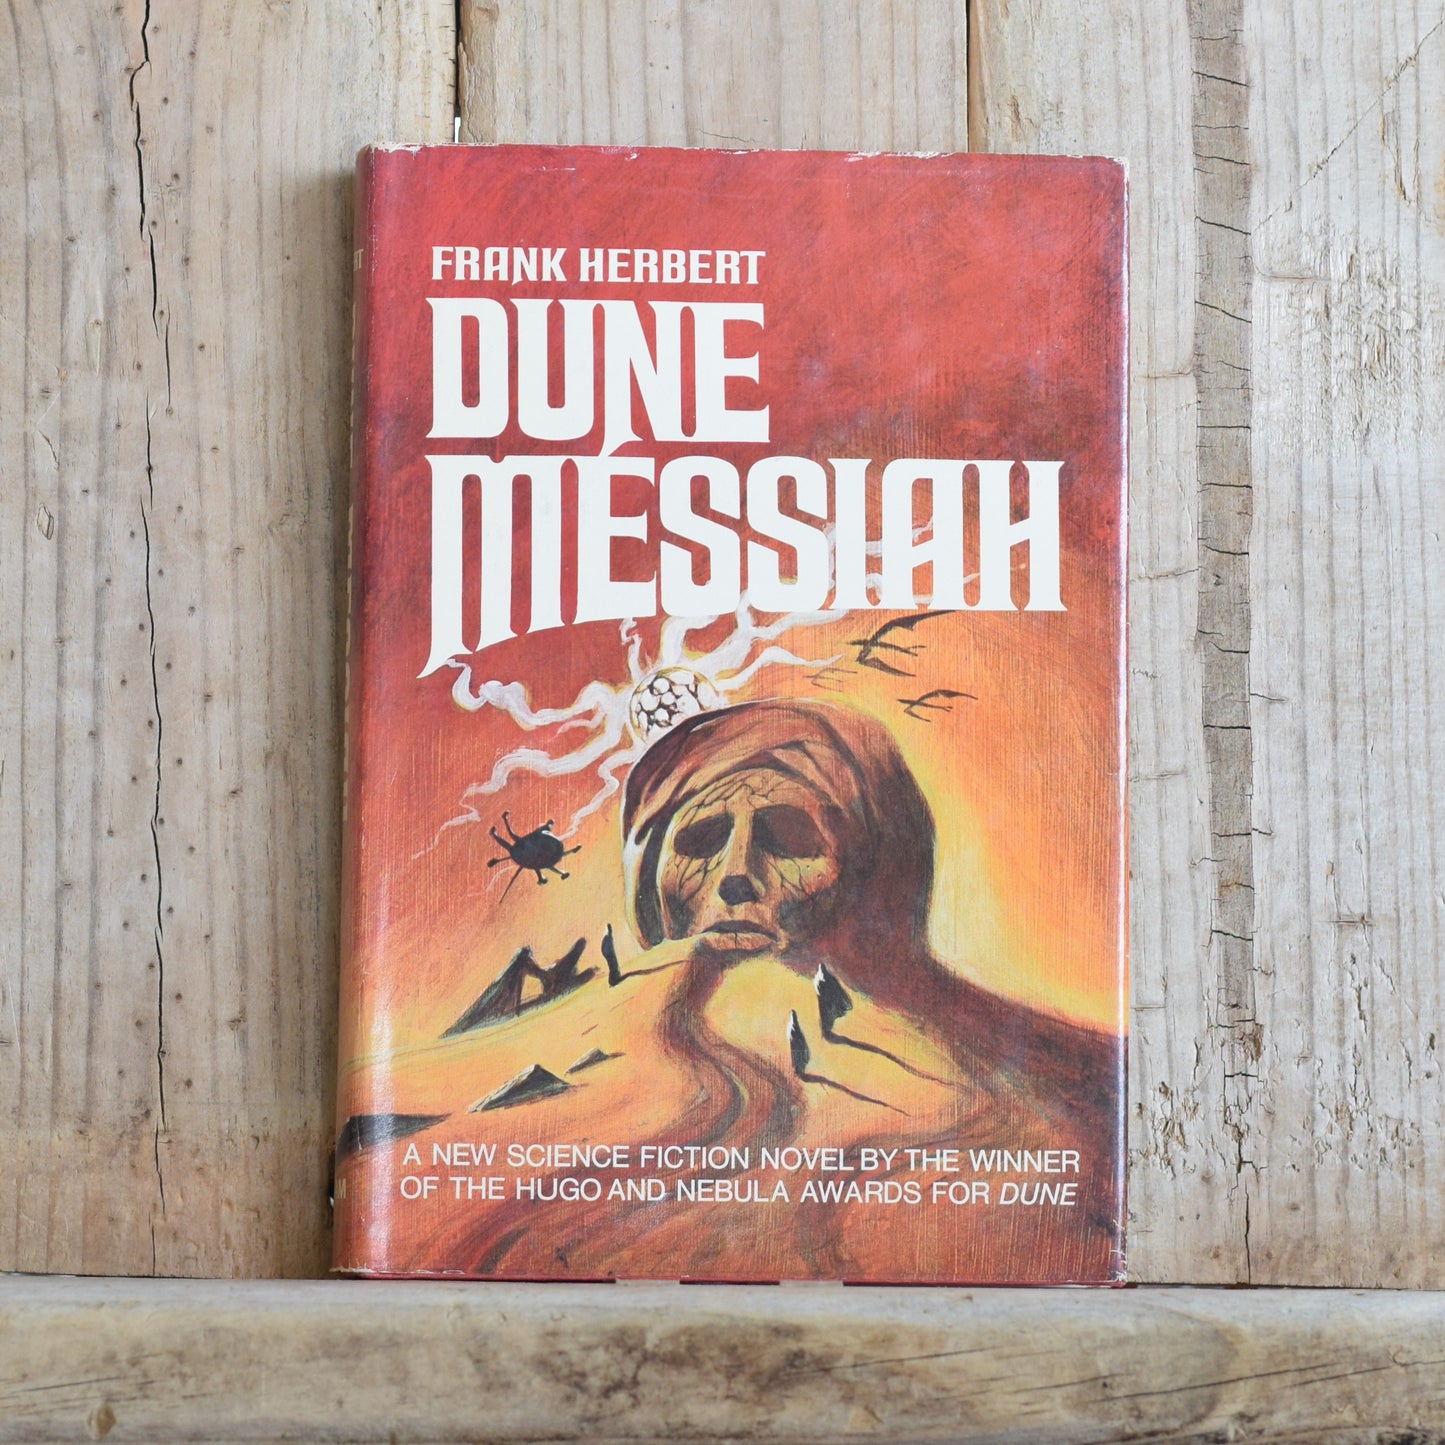 Vintage Sci-fi Hardback: Frank Herbert - The First Dune Trilogy: Dune, Dune Messiah and Children of Dune BCE's